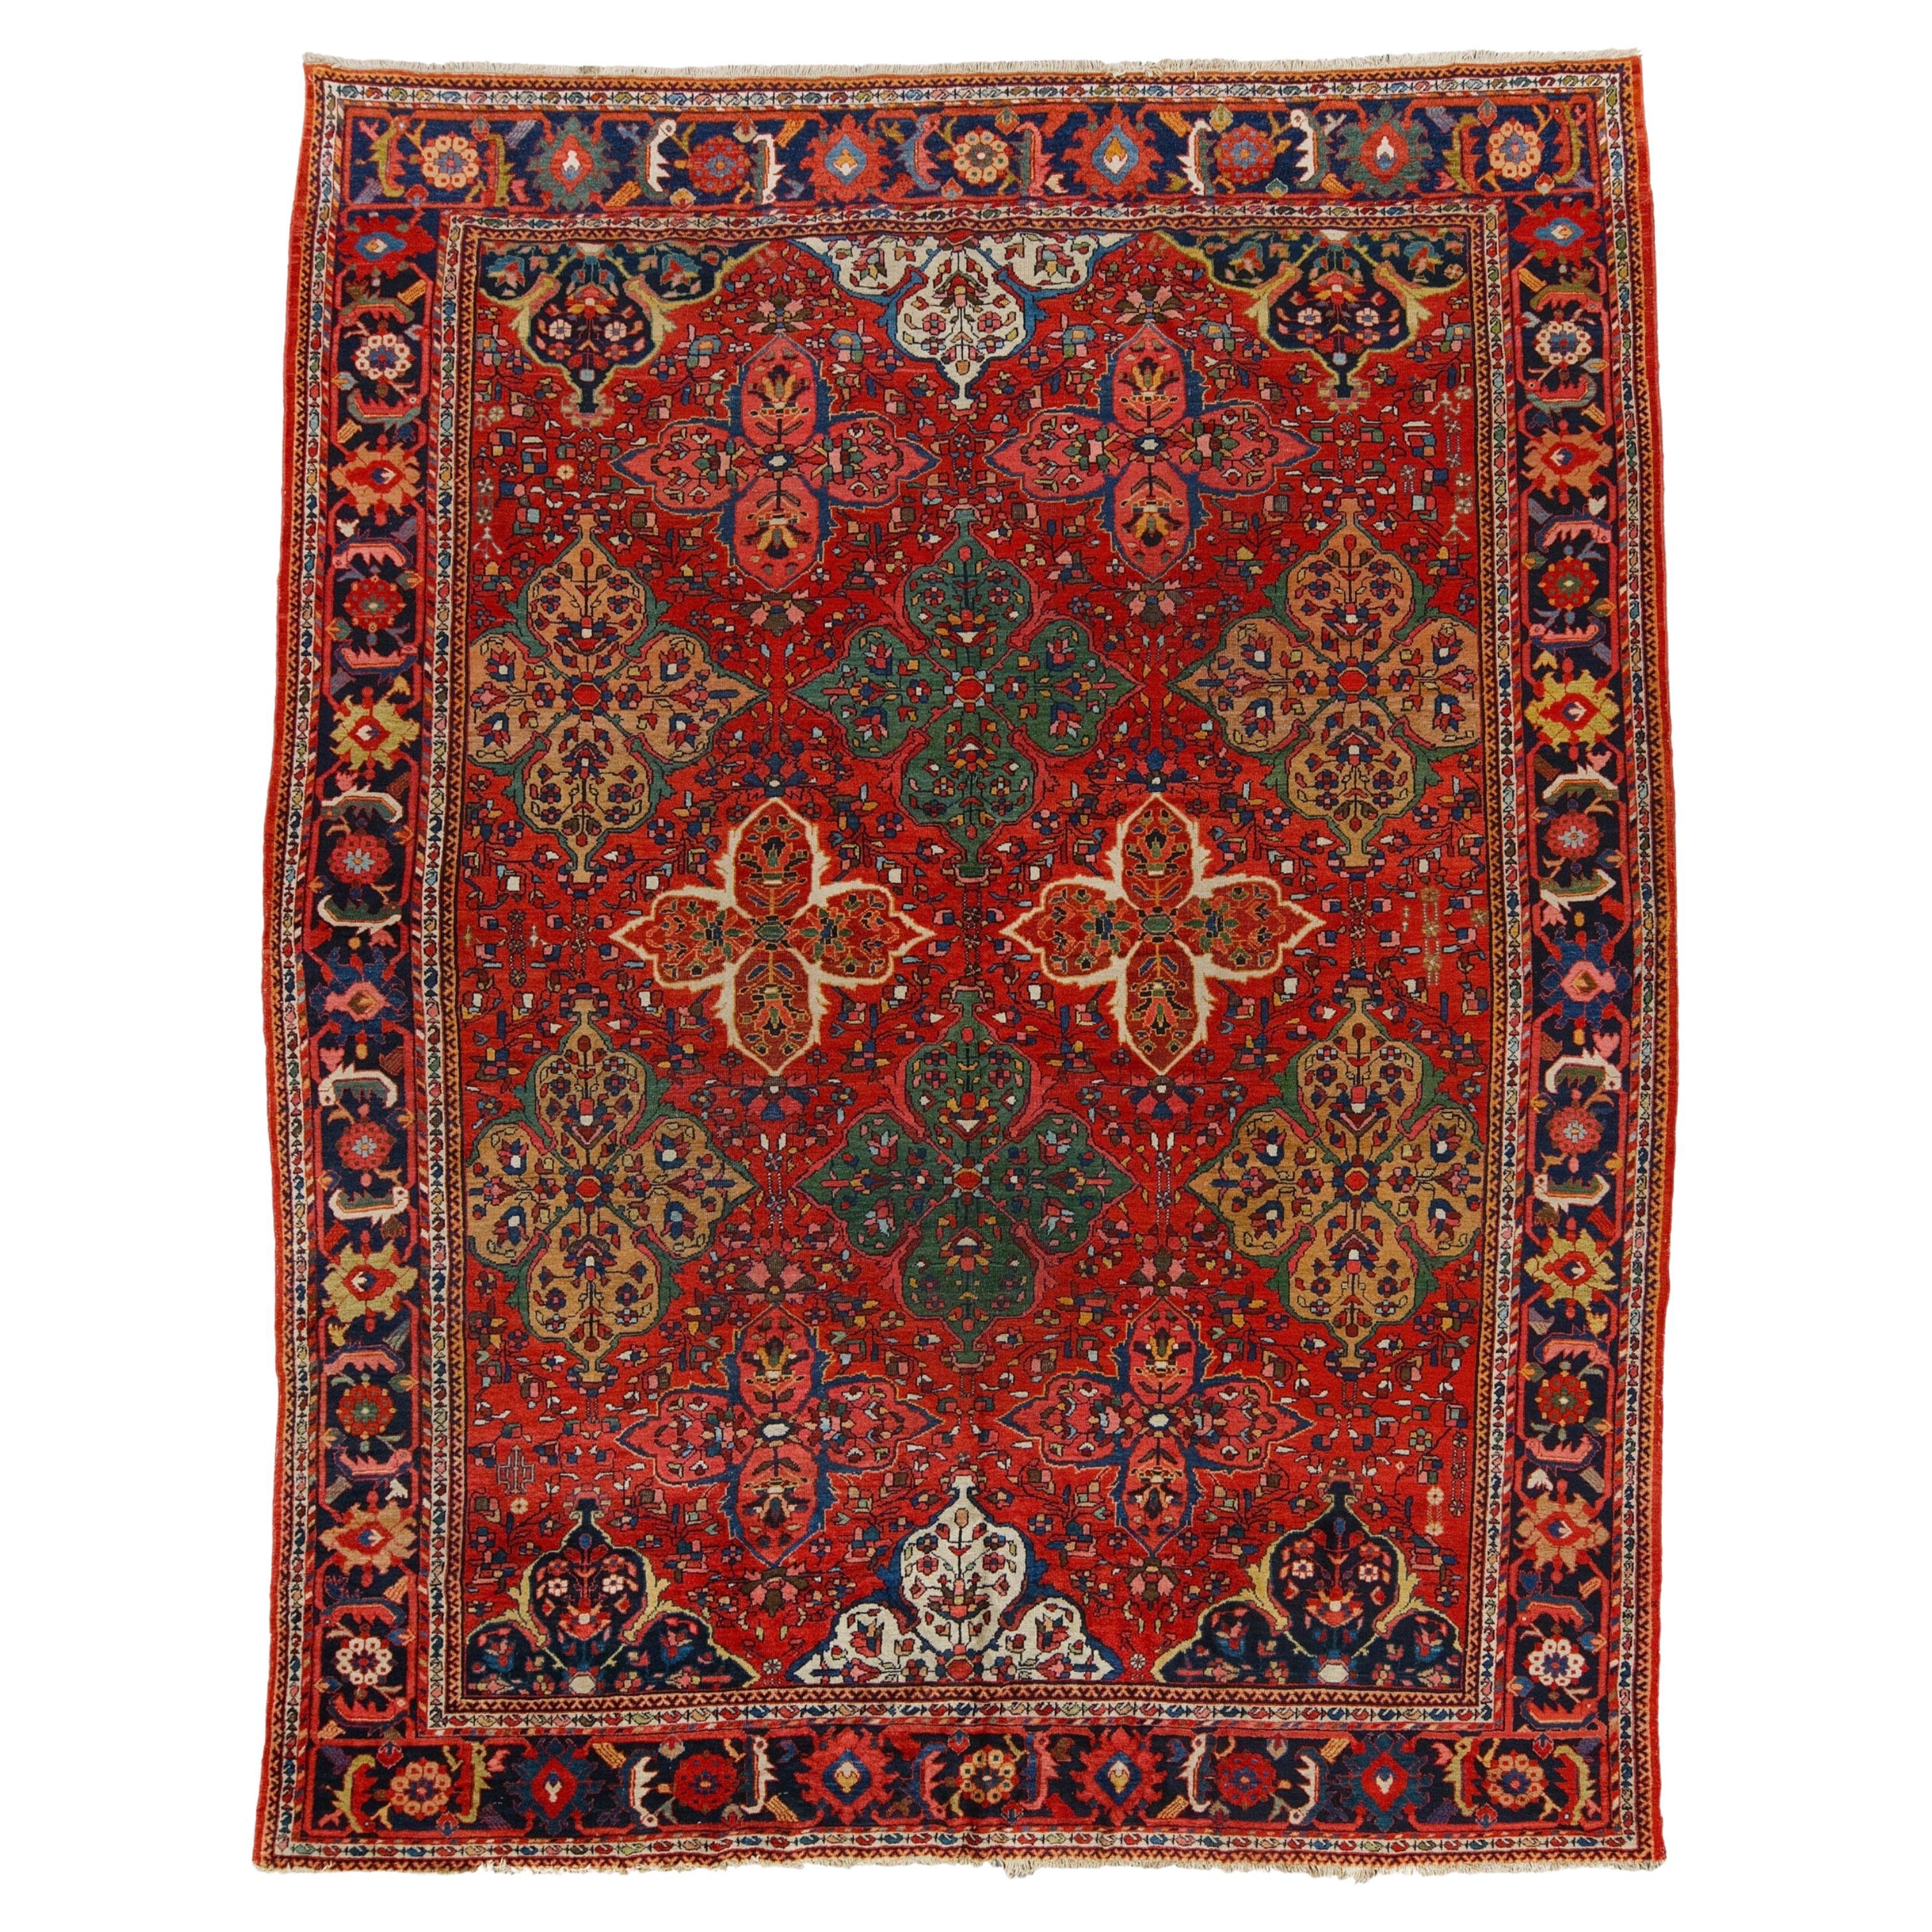 Antique Mahal Carpet - Late of 19th Century Mahal Carpet, Antique Rug For Sale